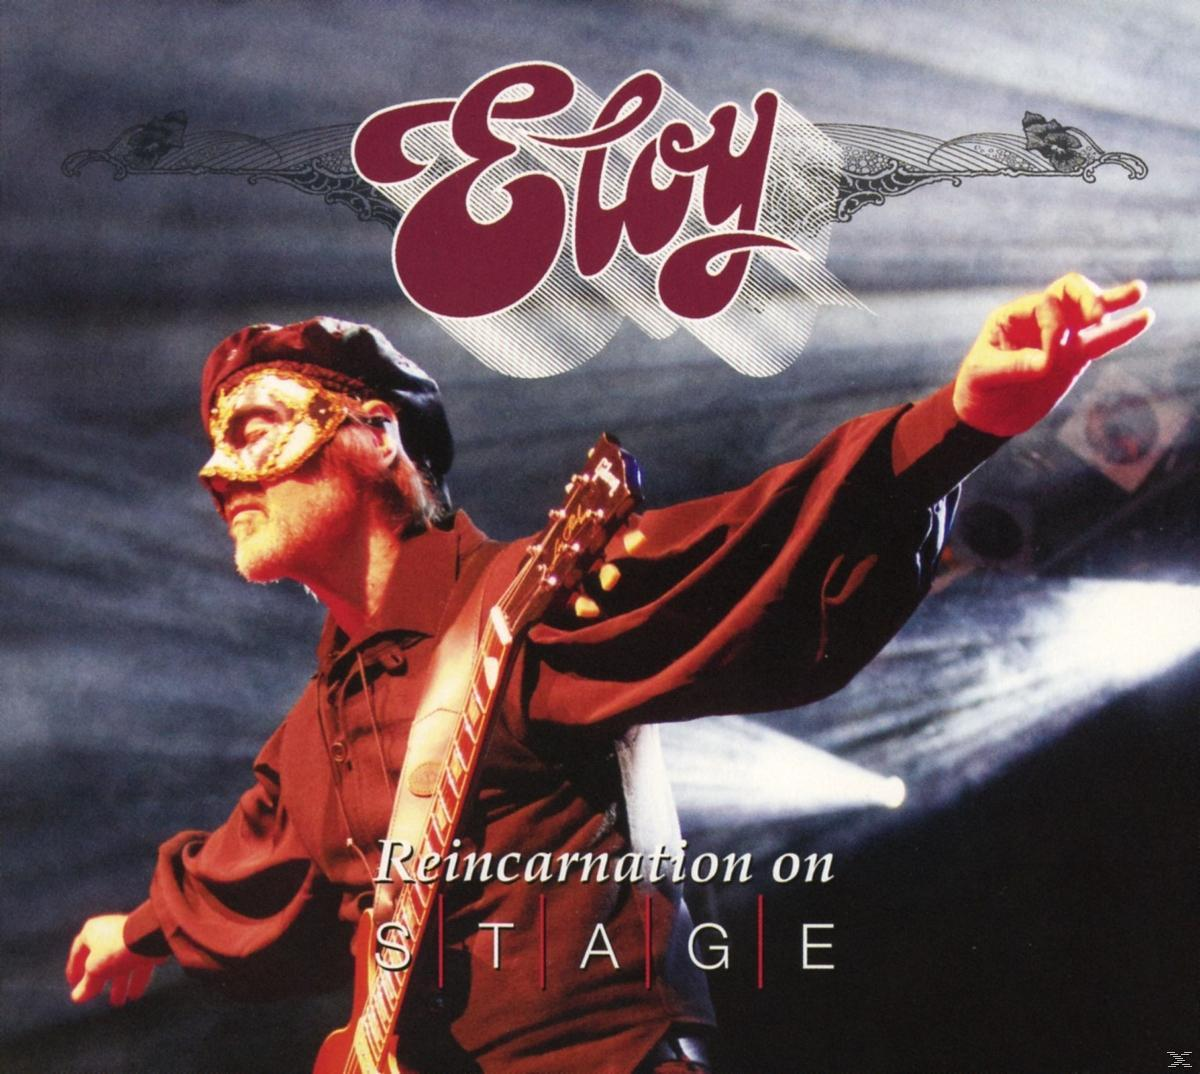 Eloy - (CD) (Live) On Reincarnation - Stage